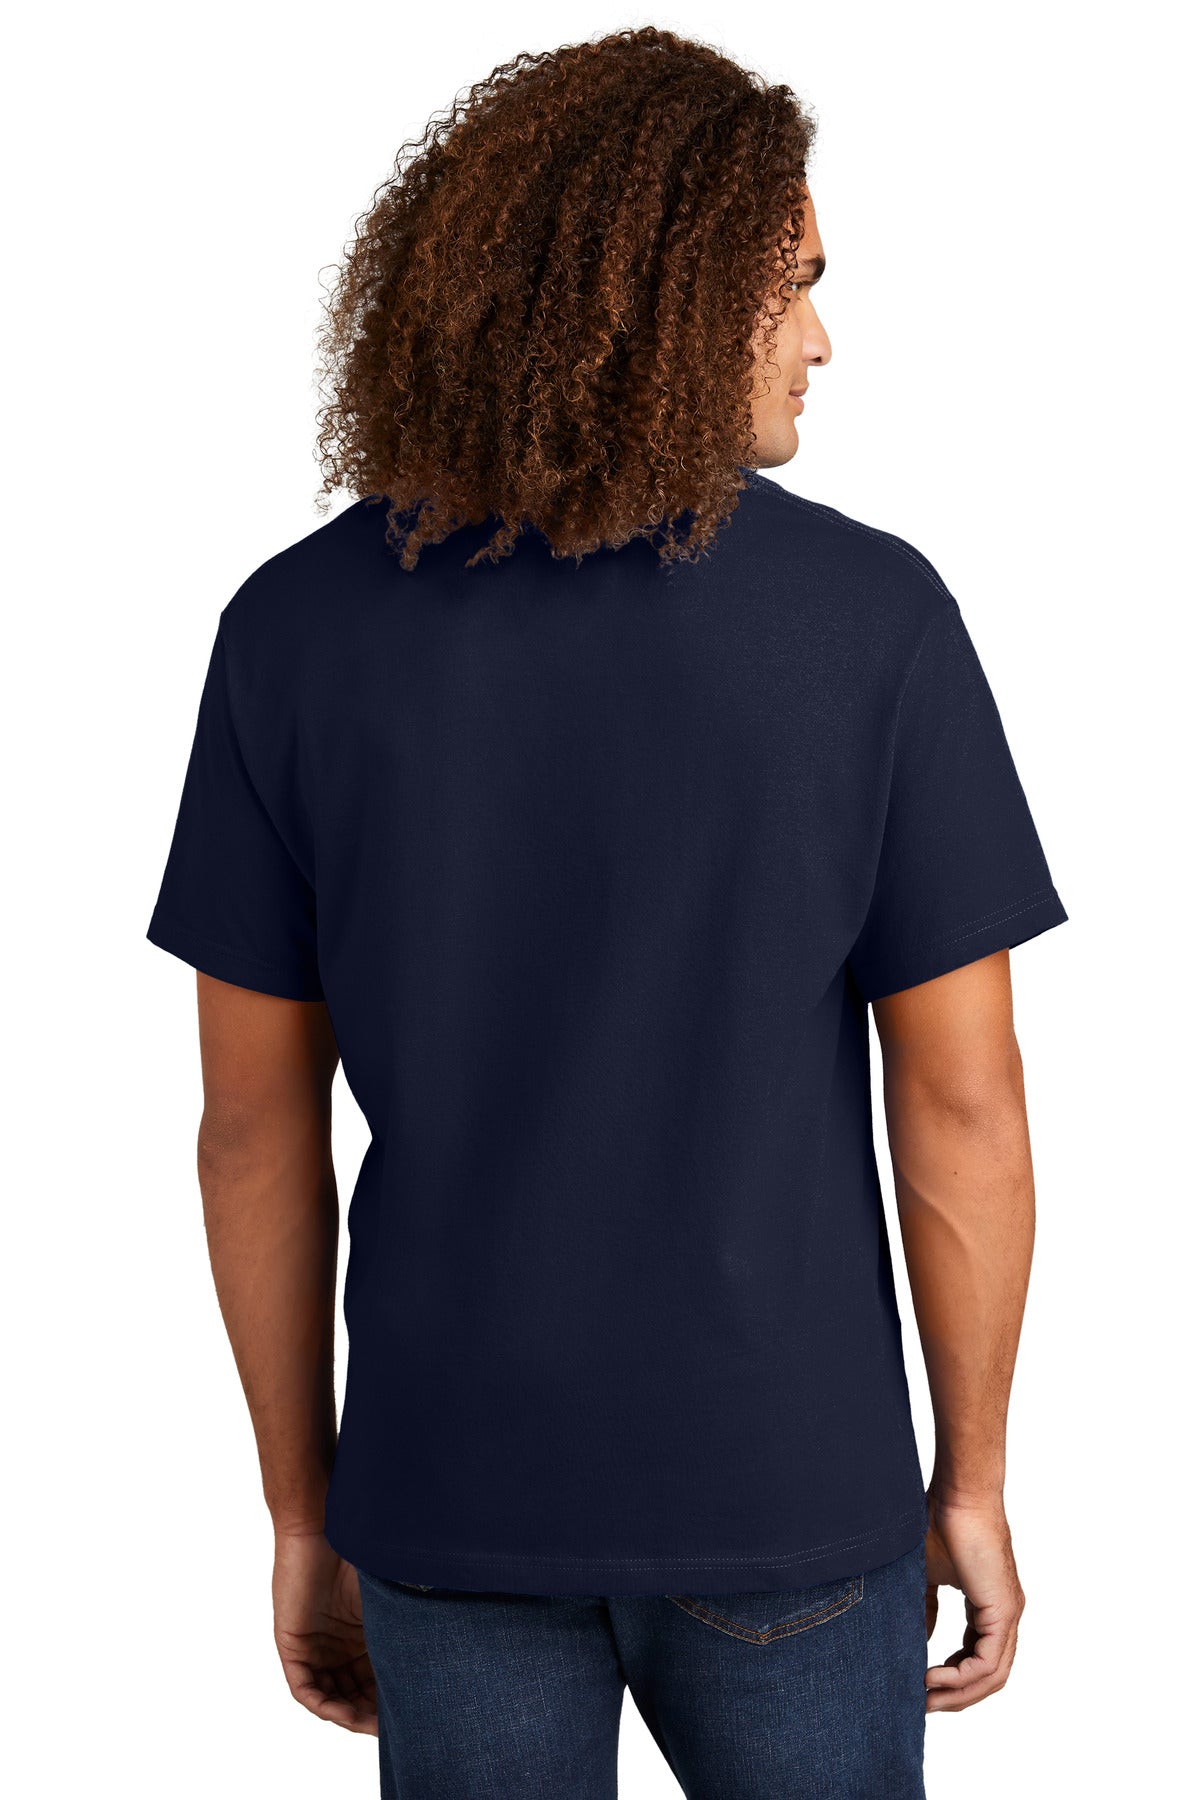 American Apparel® Relaxed T-Shirt 1301W [True Navy] - DFW Impression